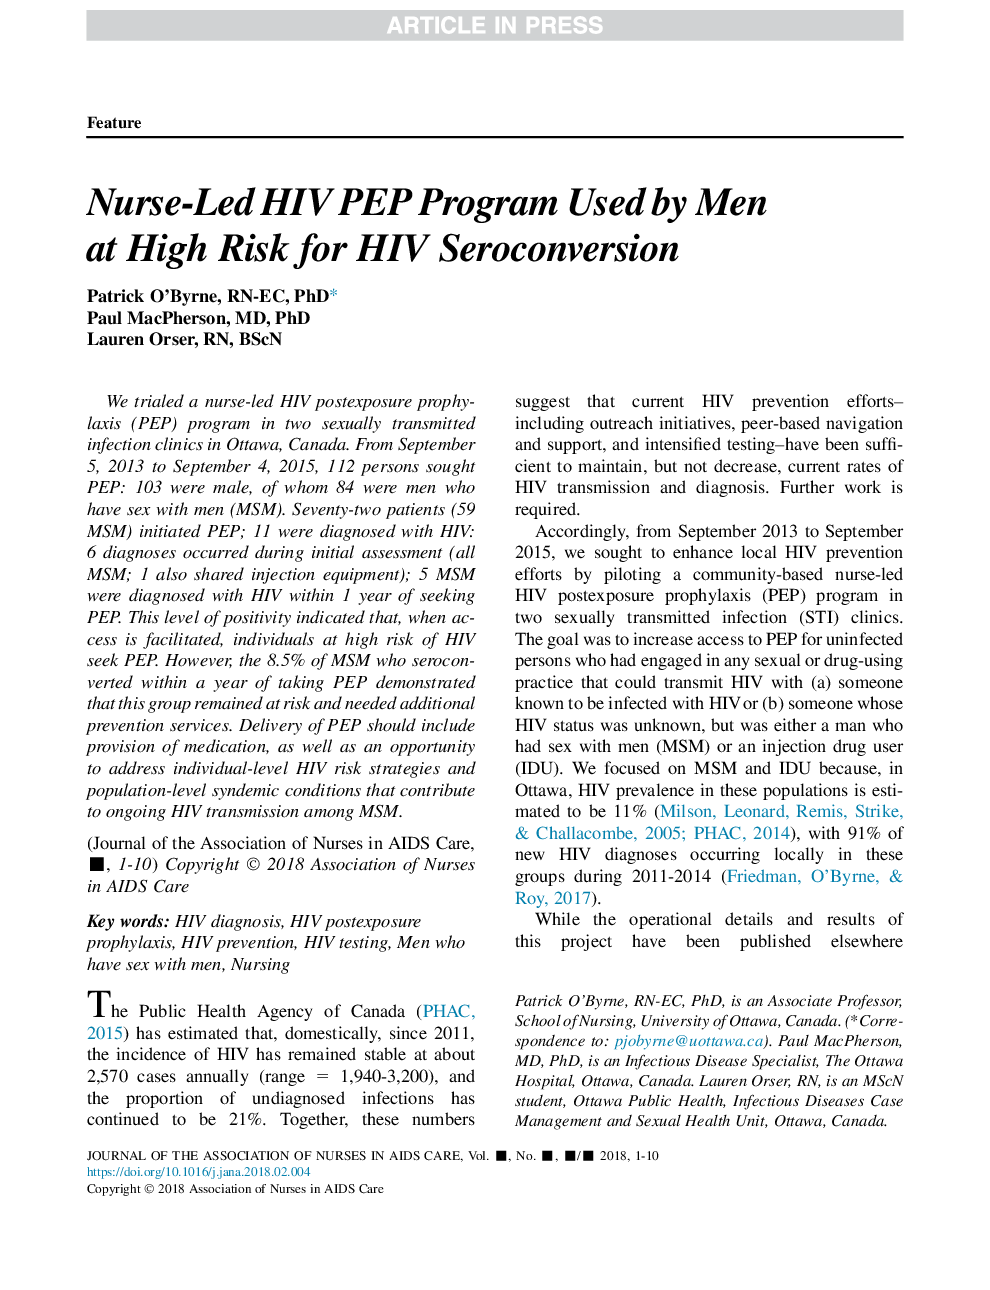 Nurse-Led HIV PEP Program Used by Men at High Risk for HIV Seroconversion